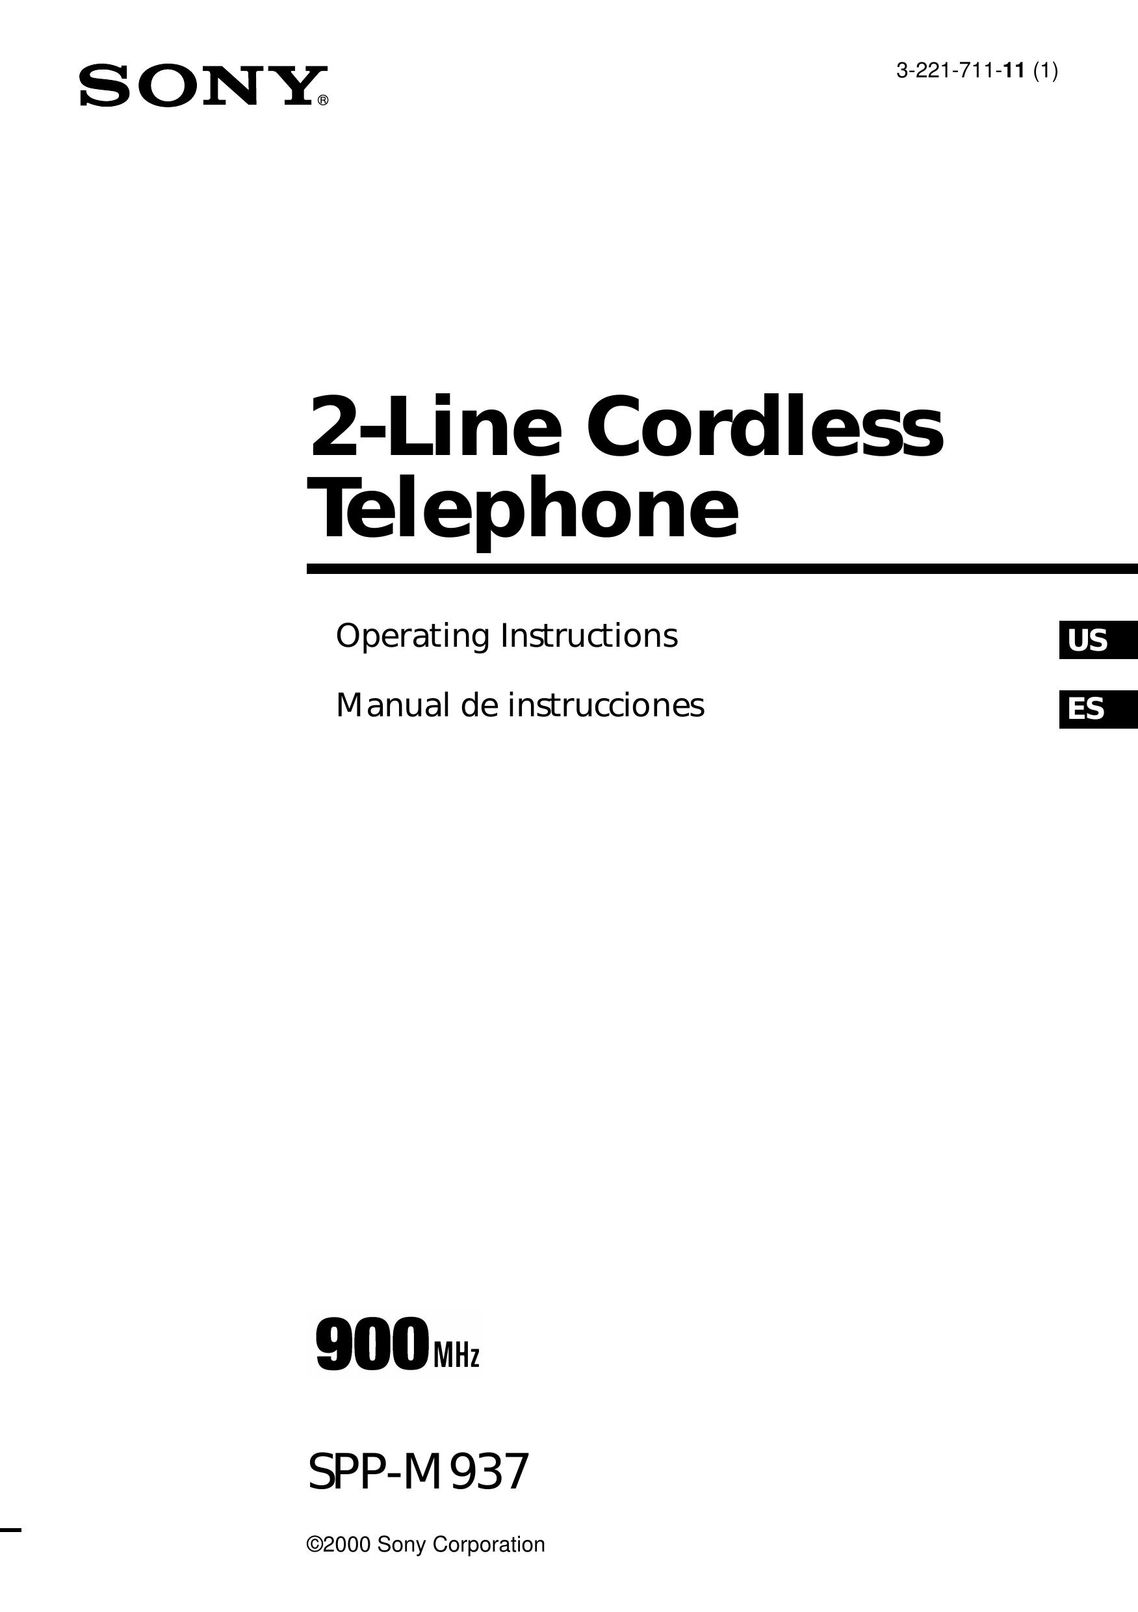 Sony SPP-M937 Cordless Telephone User Manual